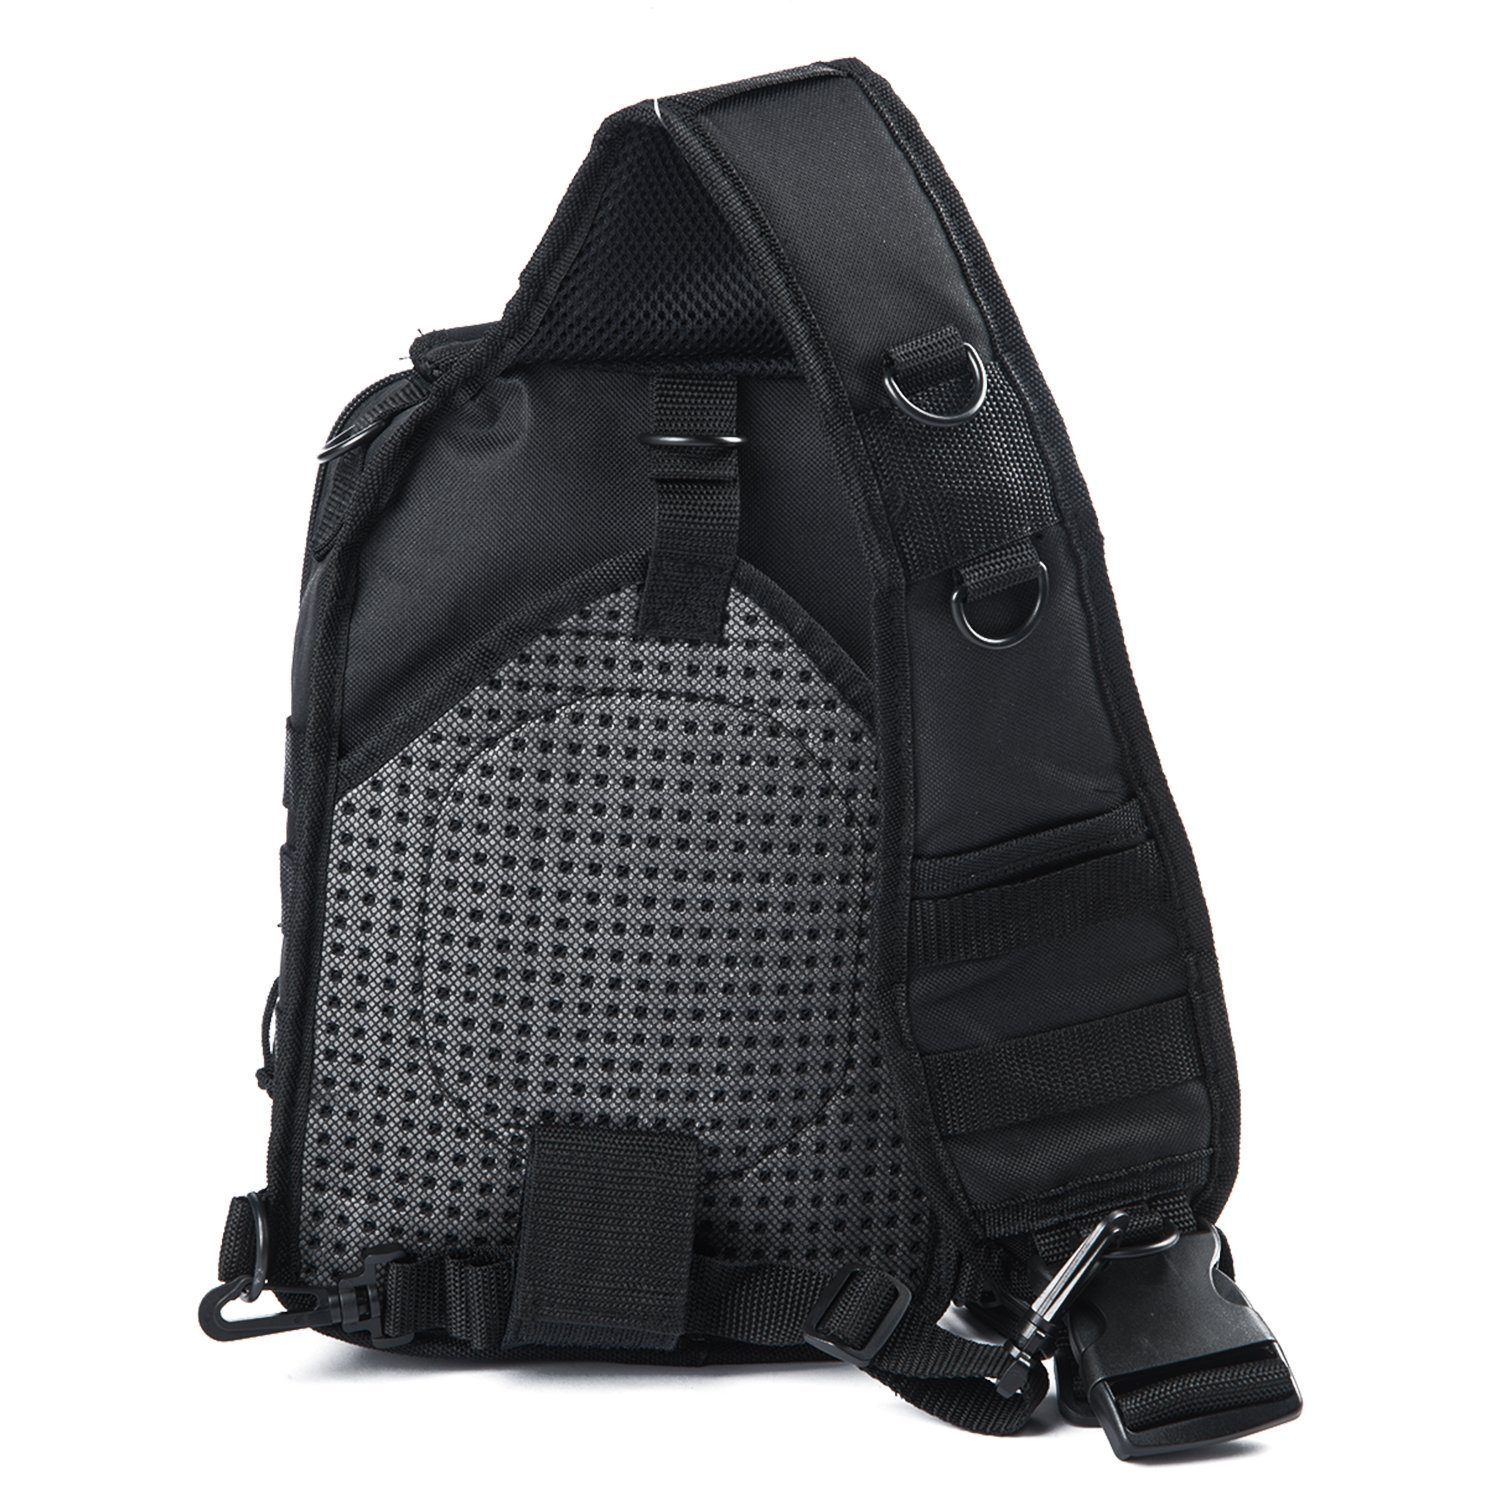 Newest Tactical Medical Sling Bag for Outdoor